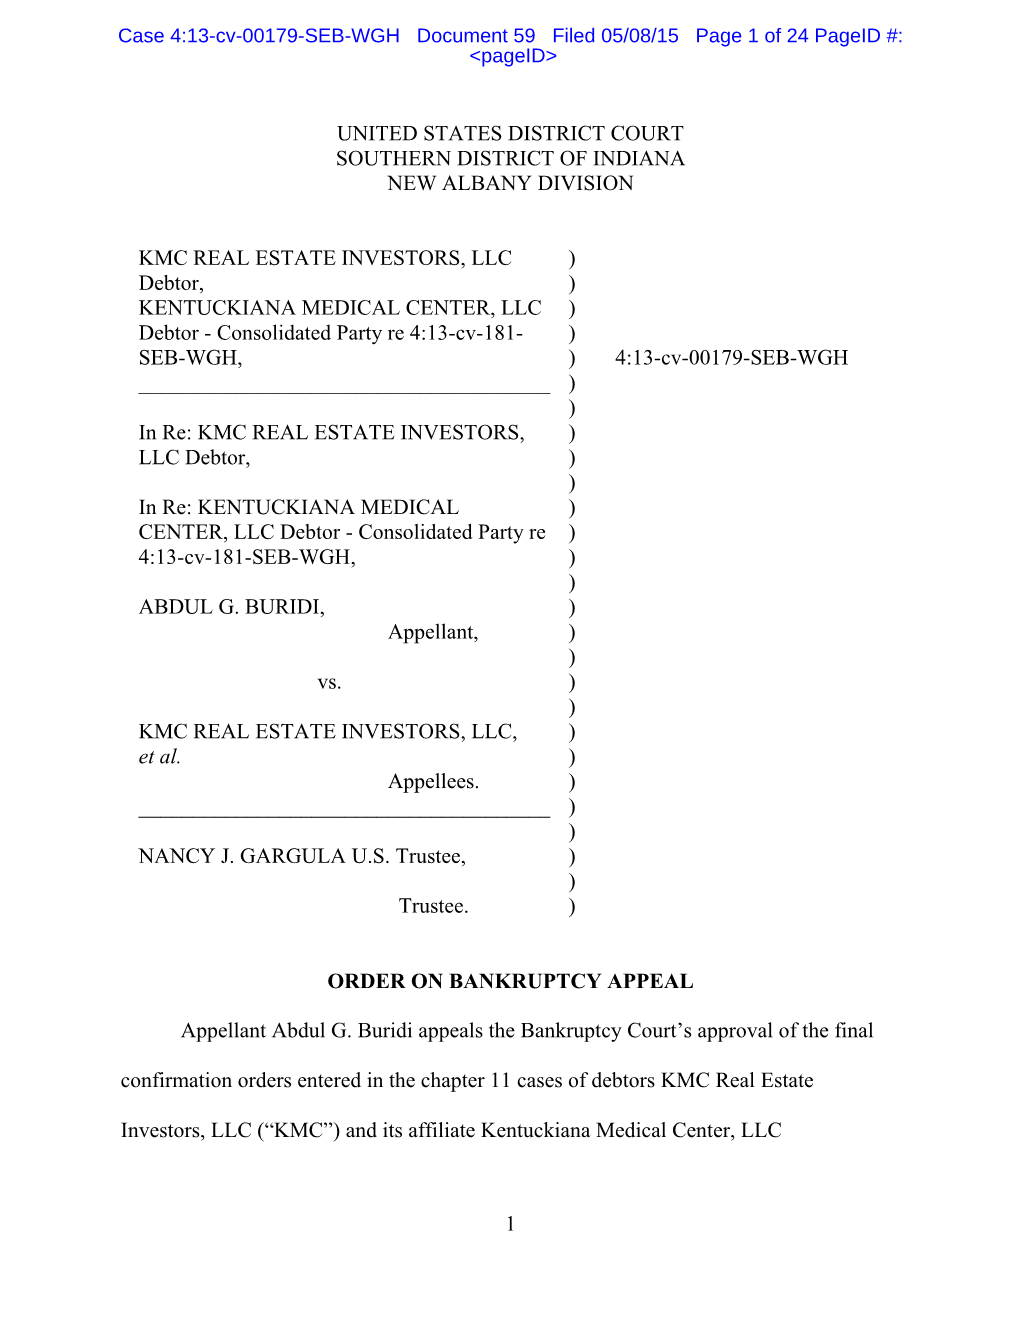 Case 4:13-Cv-00179-SEB-WGH Document 59 Filed 05/08/15 Page